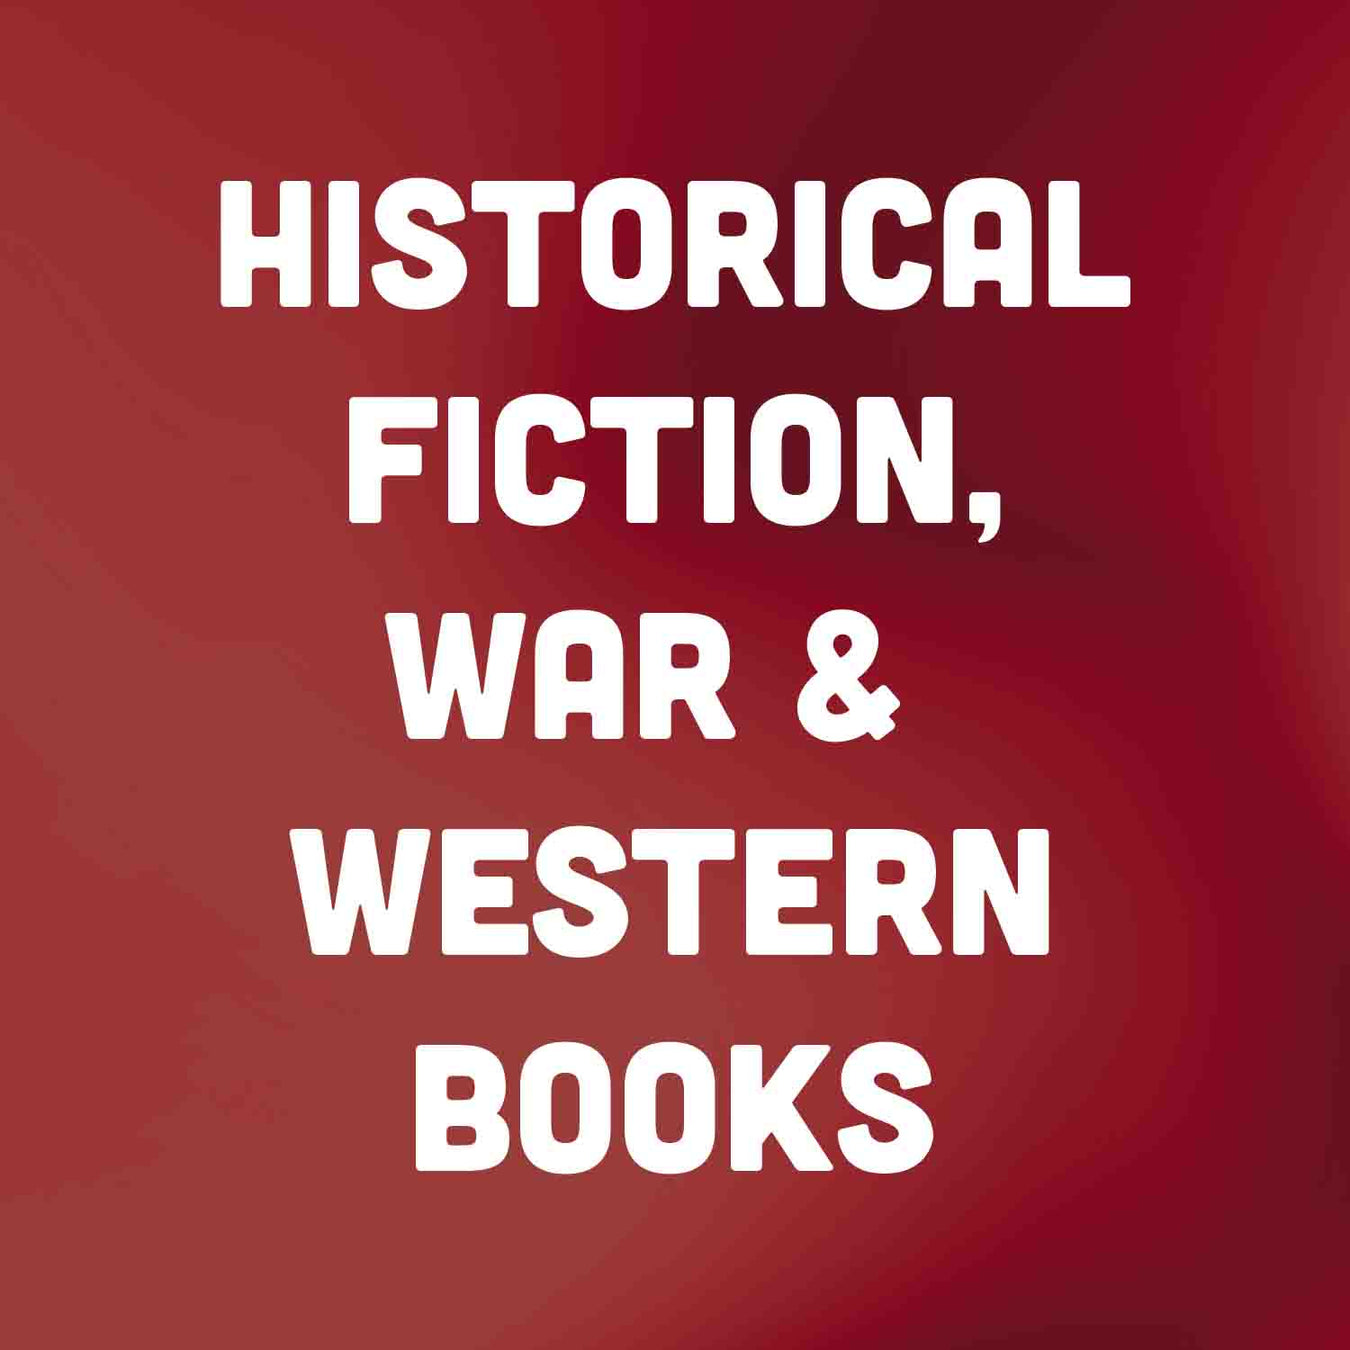 Historical Fiction, War & Western Books